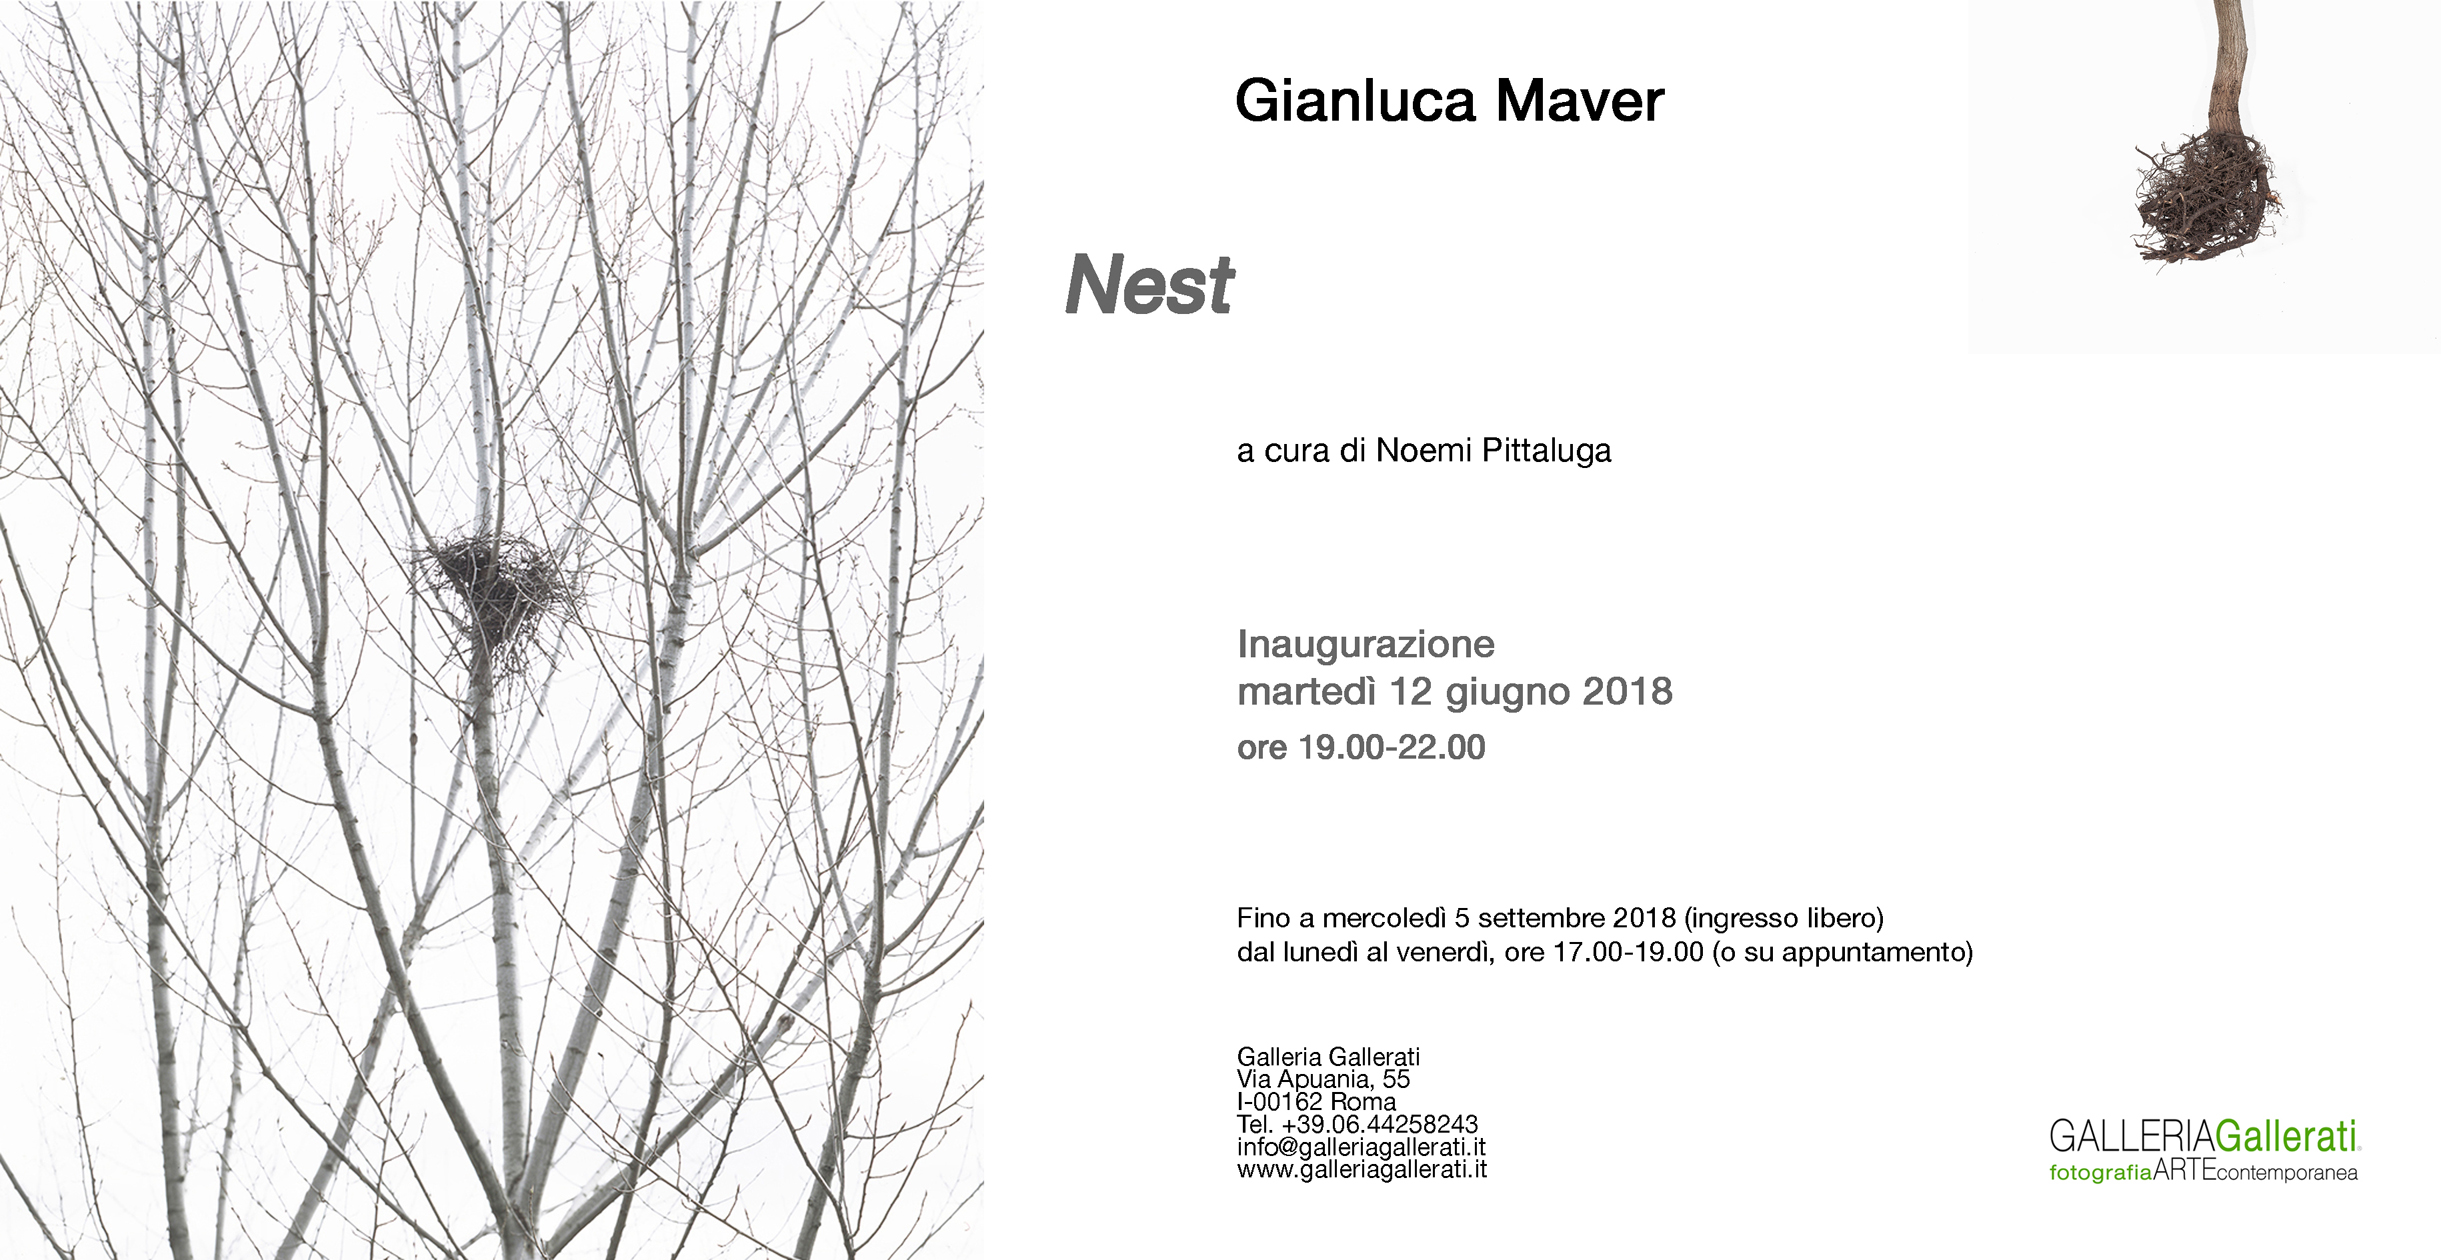 G.MAVER_Nest_INVITO.jpg